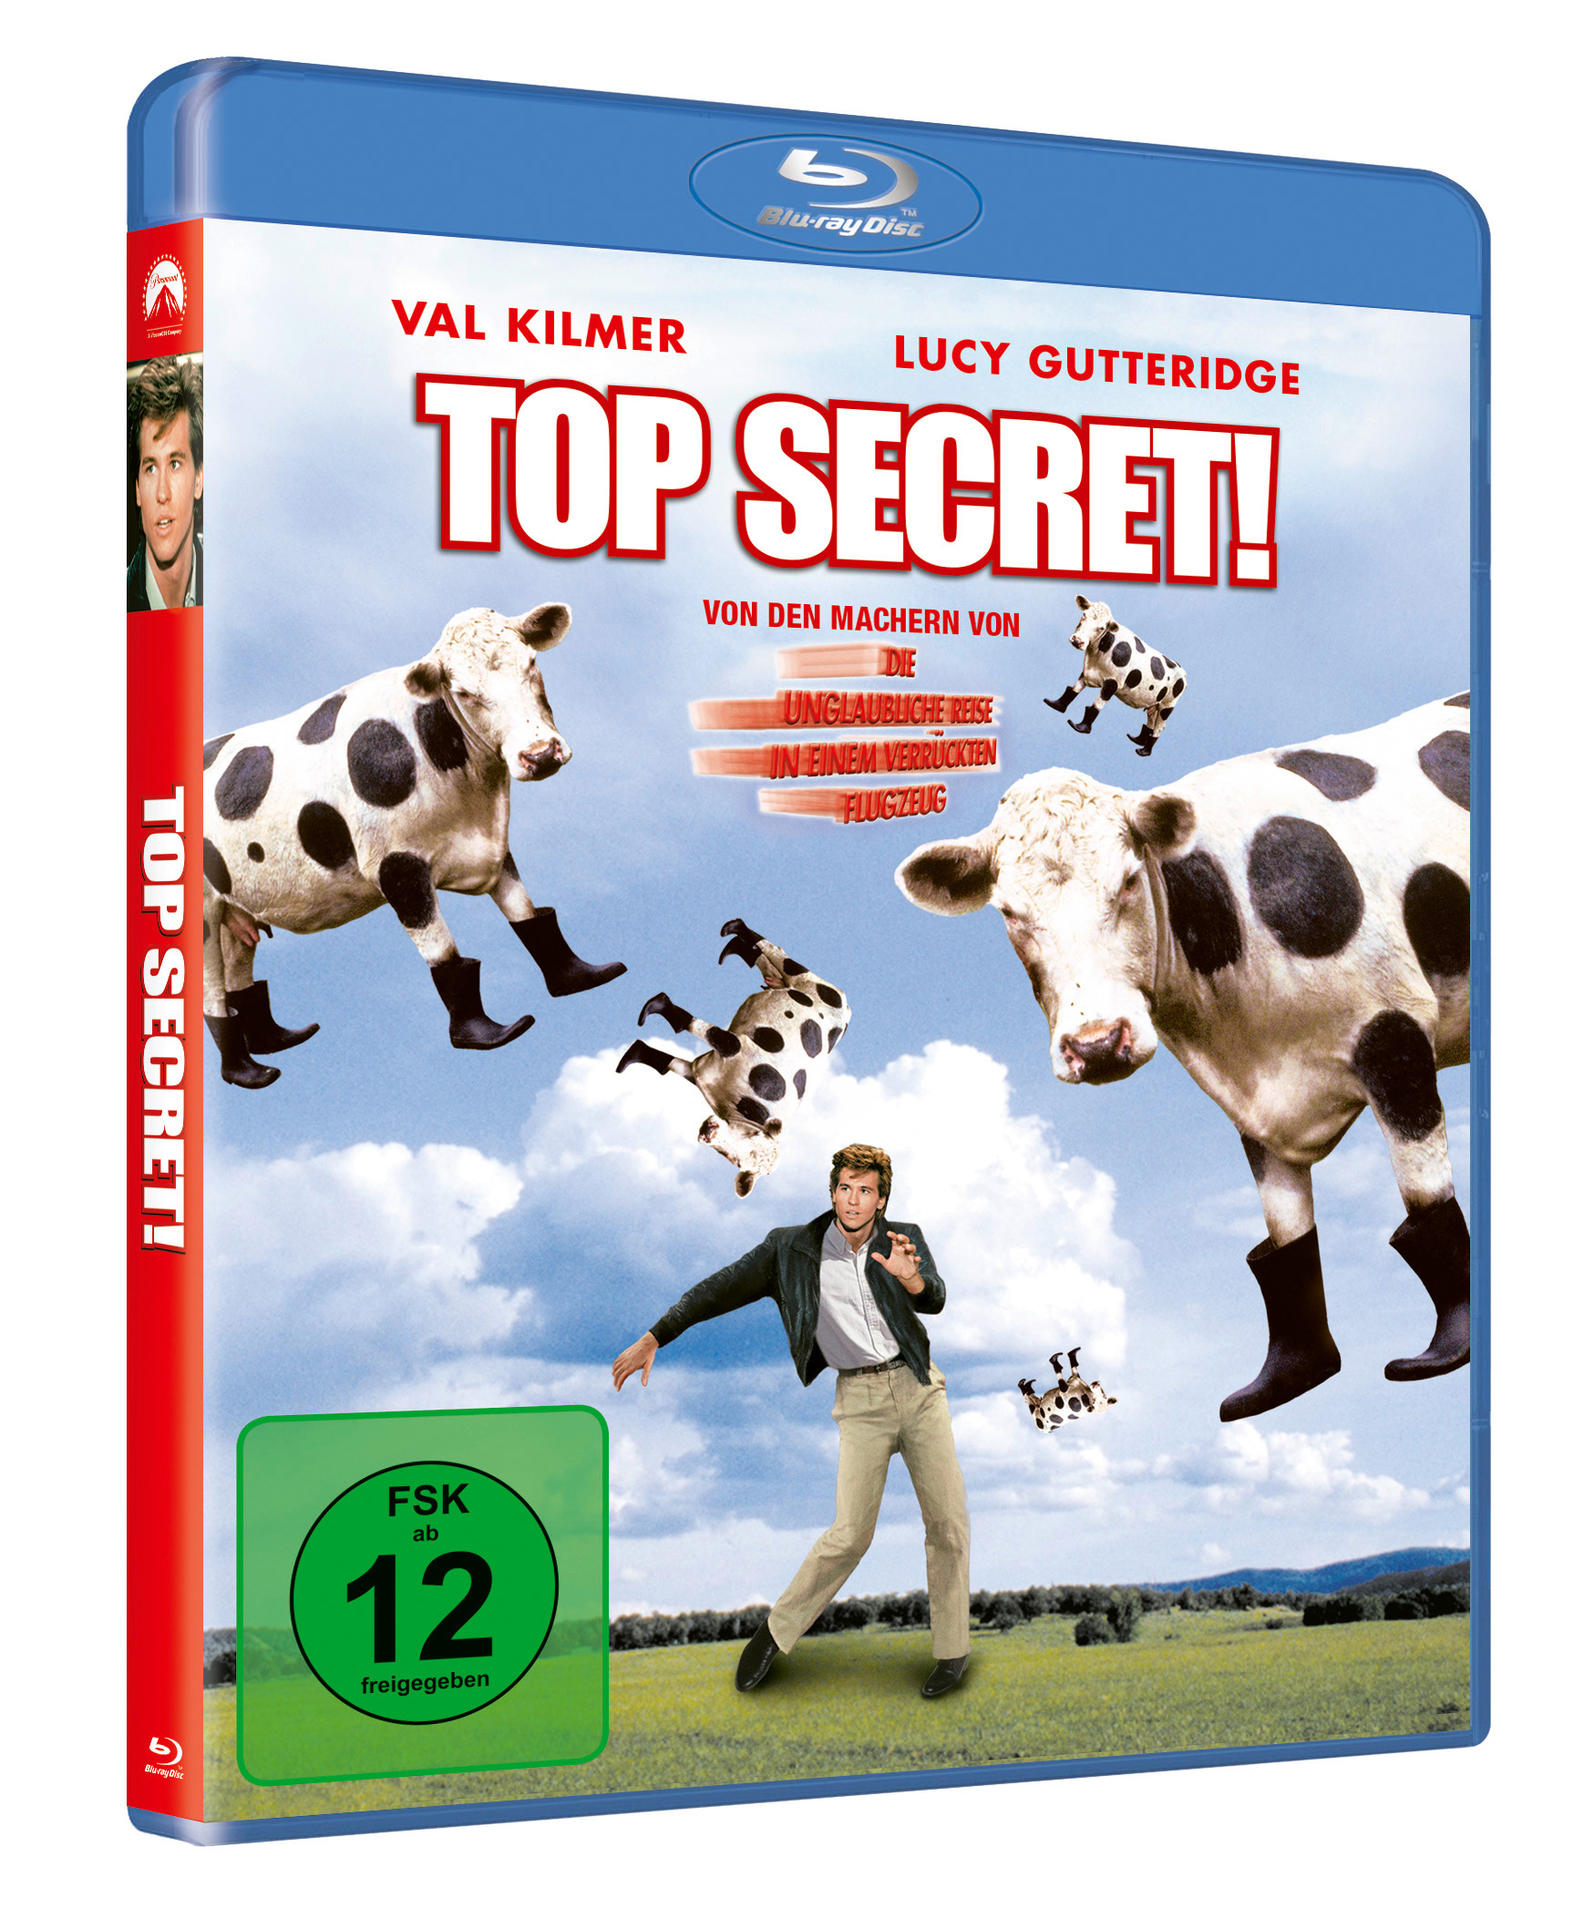 Secret! Top Blu-ray